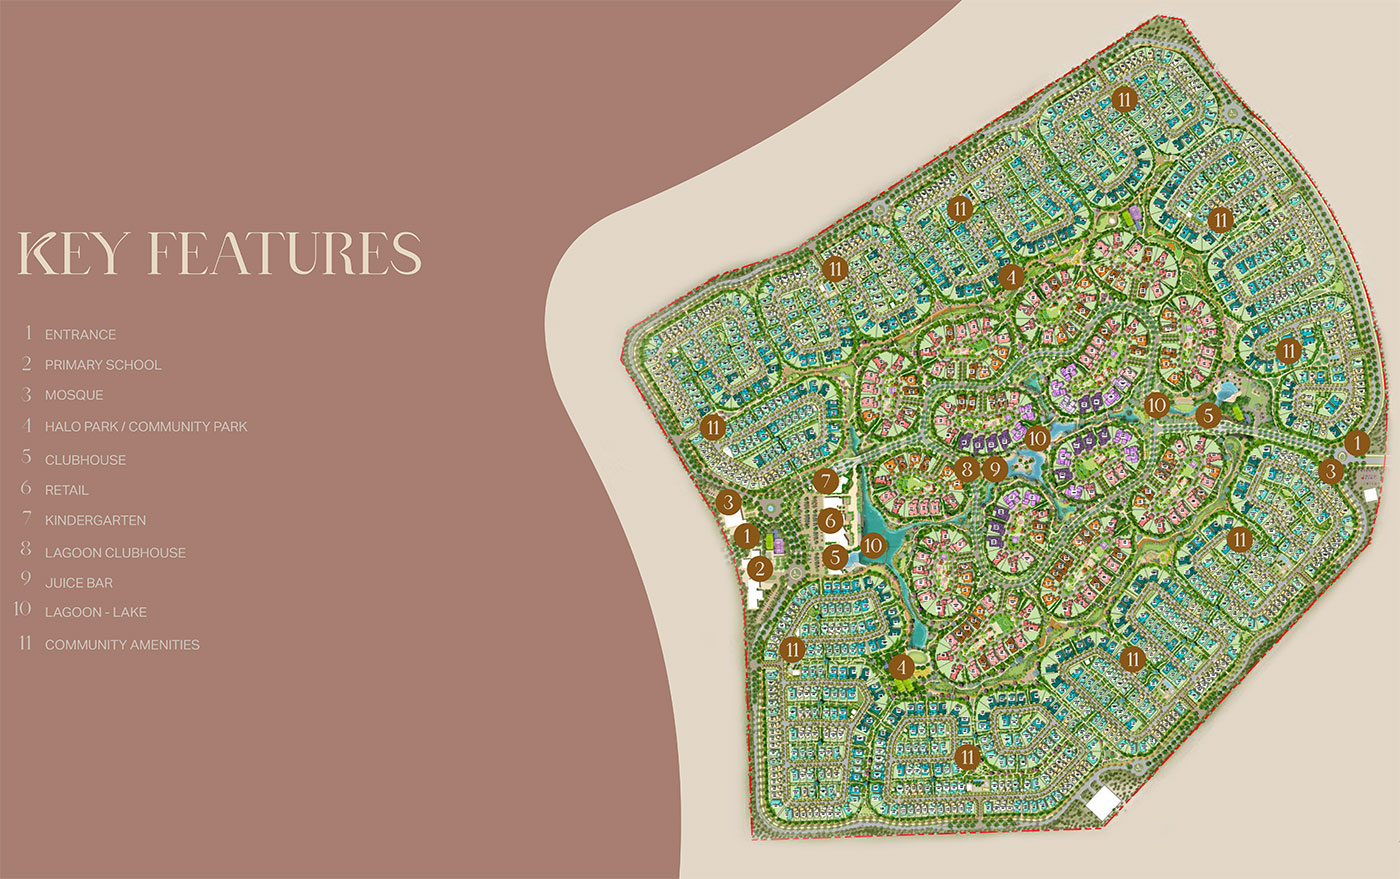 The Acres by Meraas at Dubai Masterplan